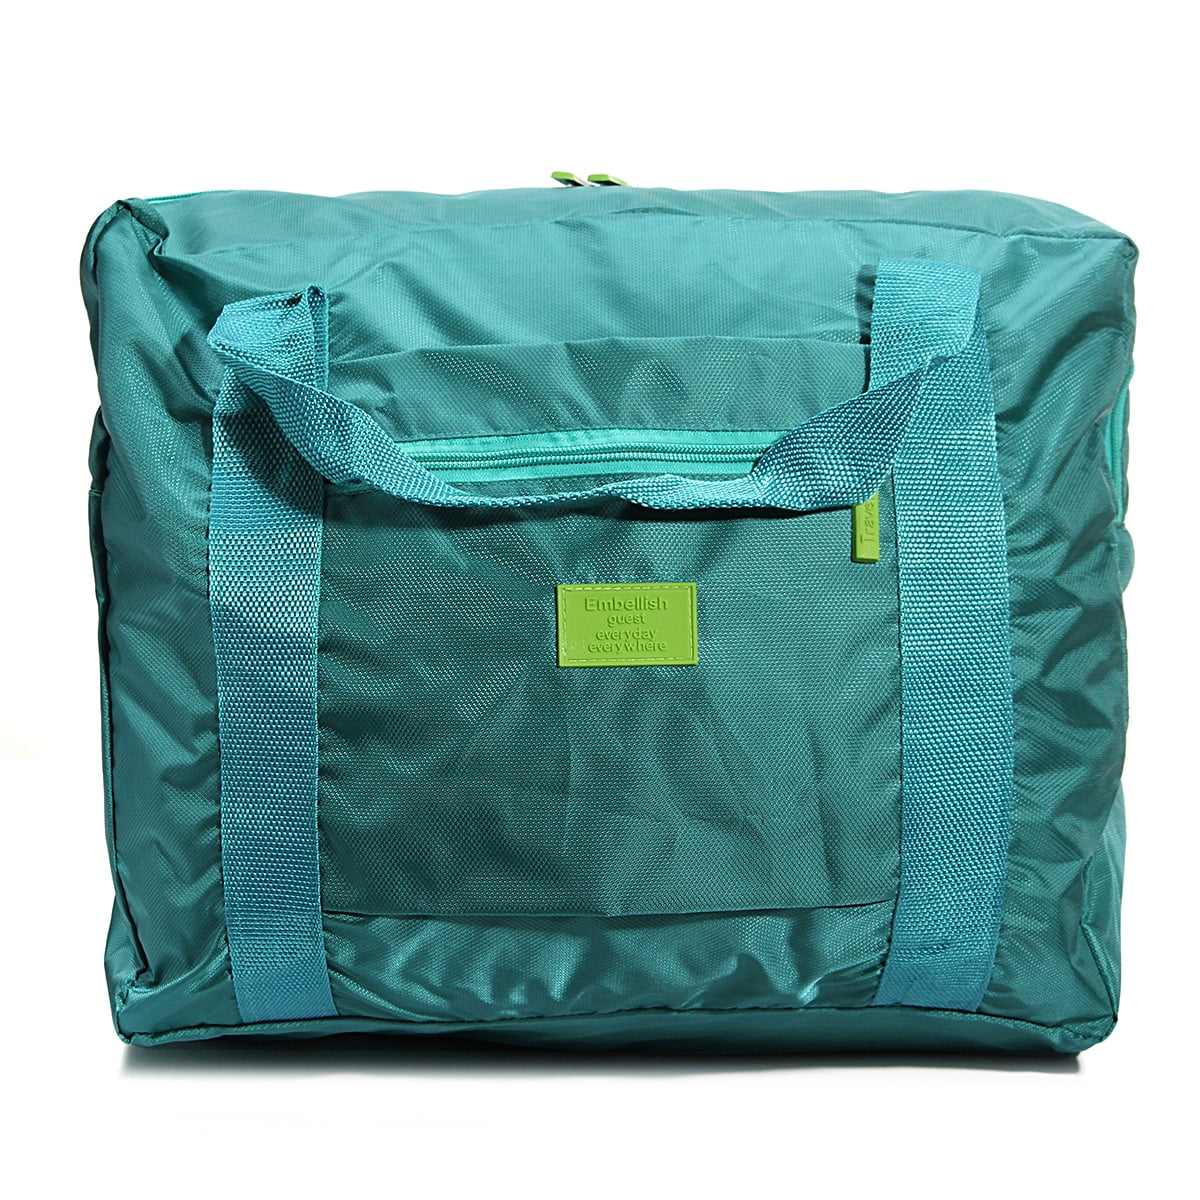 Large Capacity Waterproof Foldable Storage Tote 3 Travel Luggage Duffle Bag Lightweight Portable Handbag Musical Notes